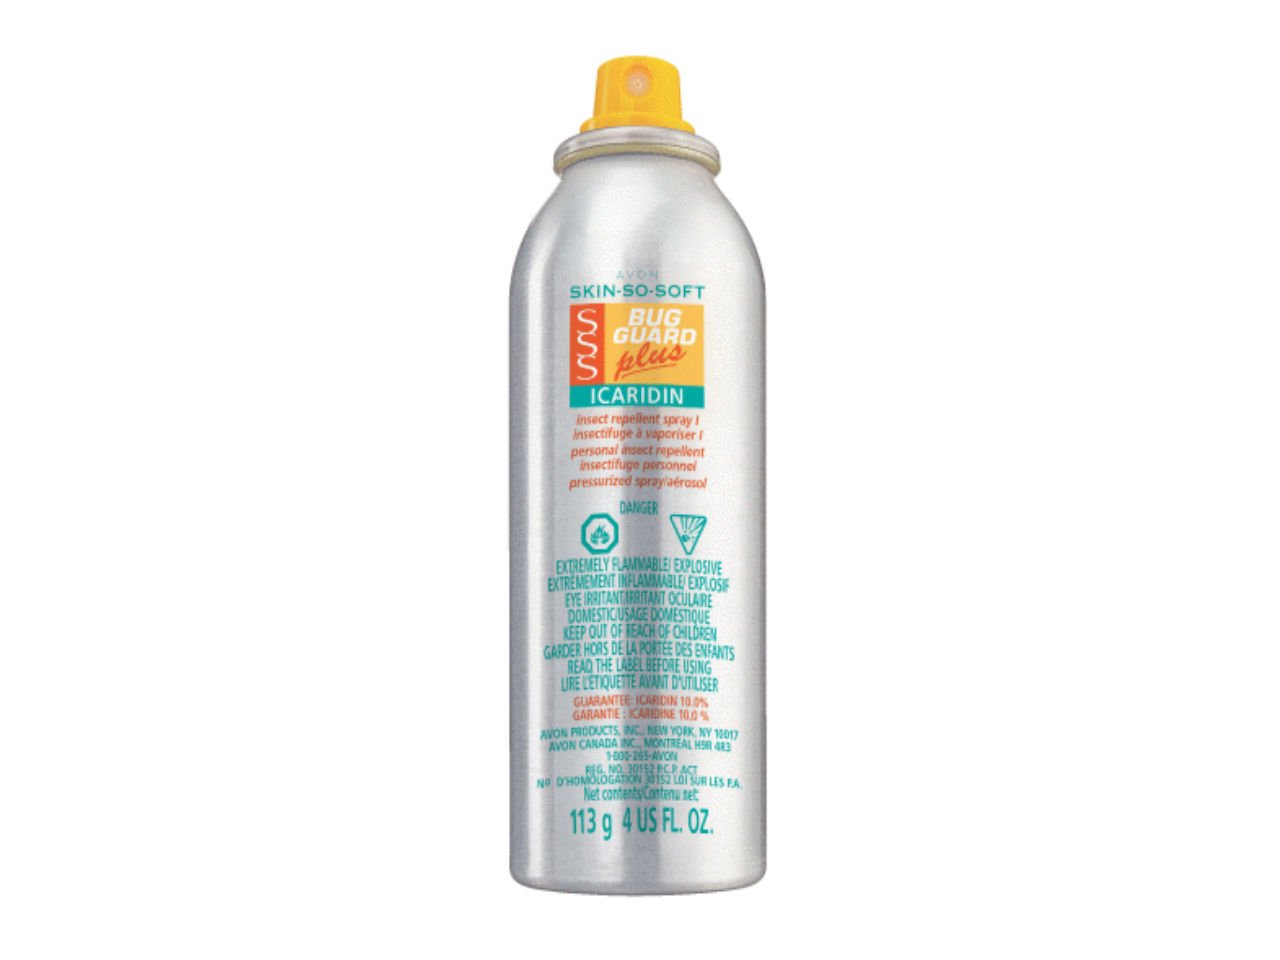 Avon Skin So Soft Bug Guard Plus Icaridin Insect Repellent Spray